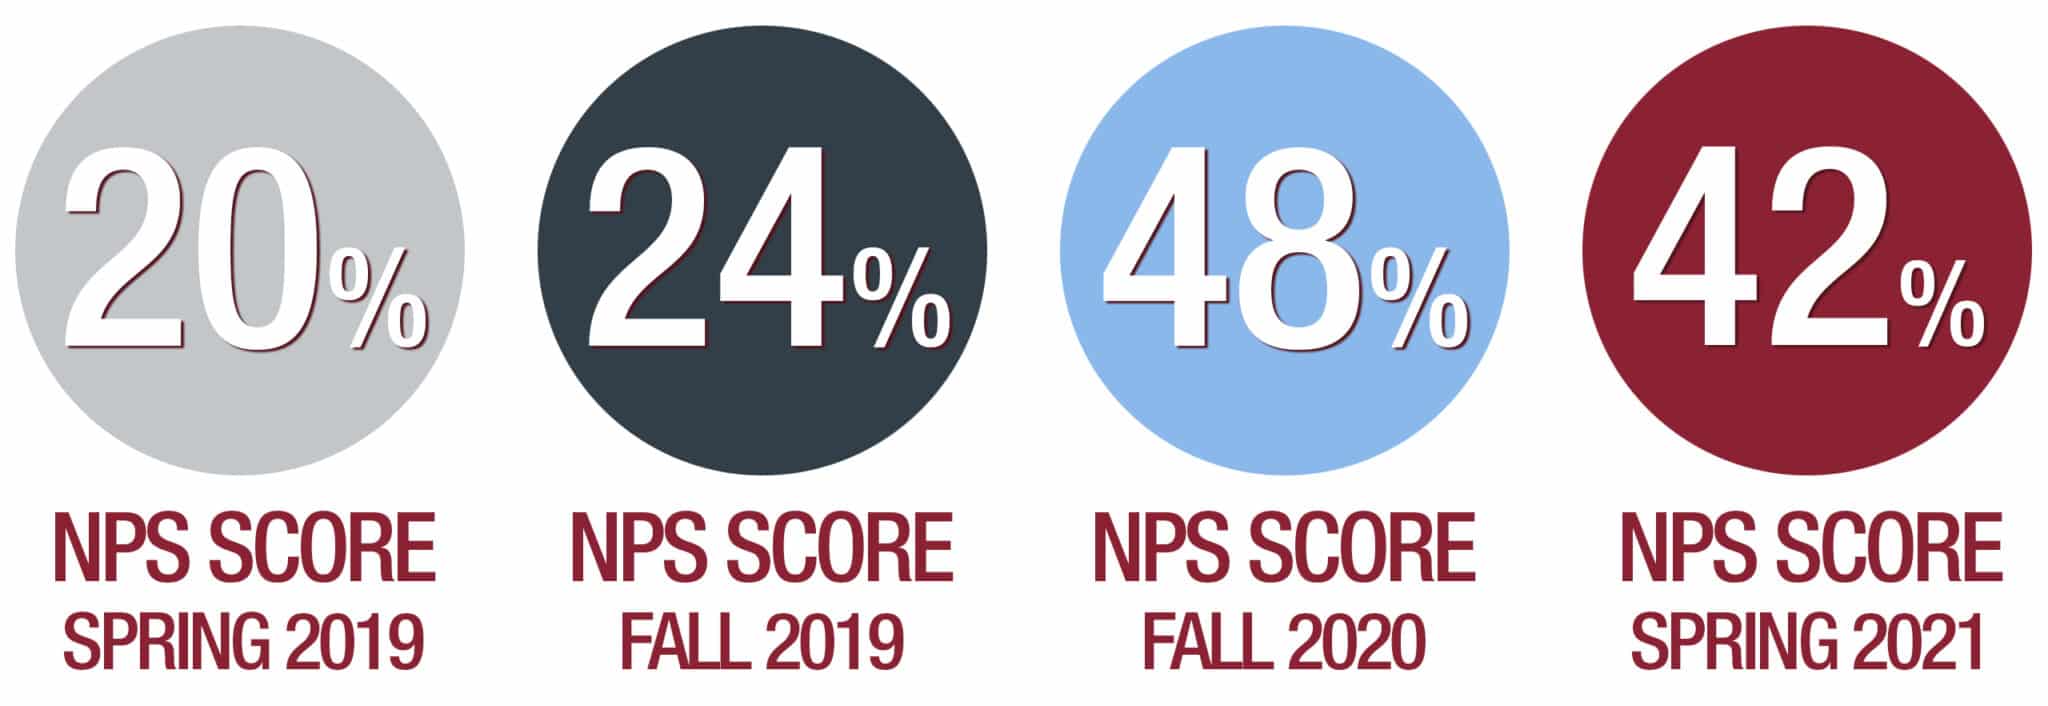 NPS-Stats-Full-2